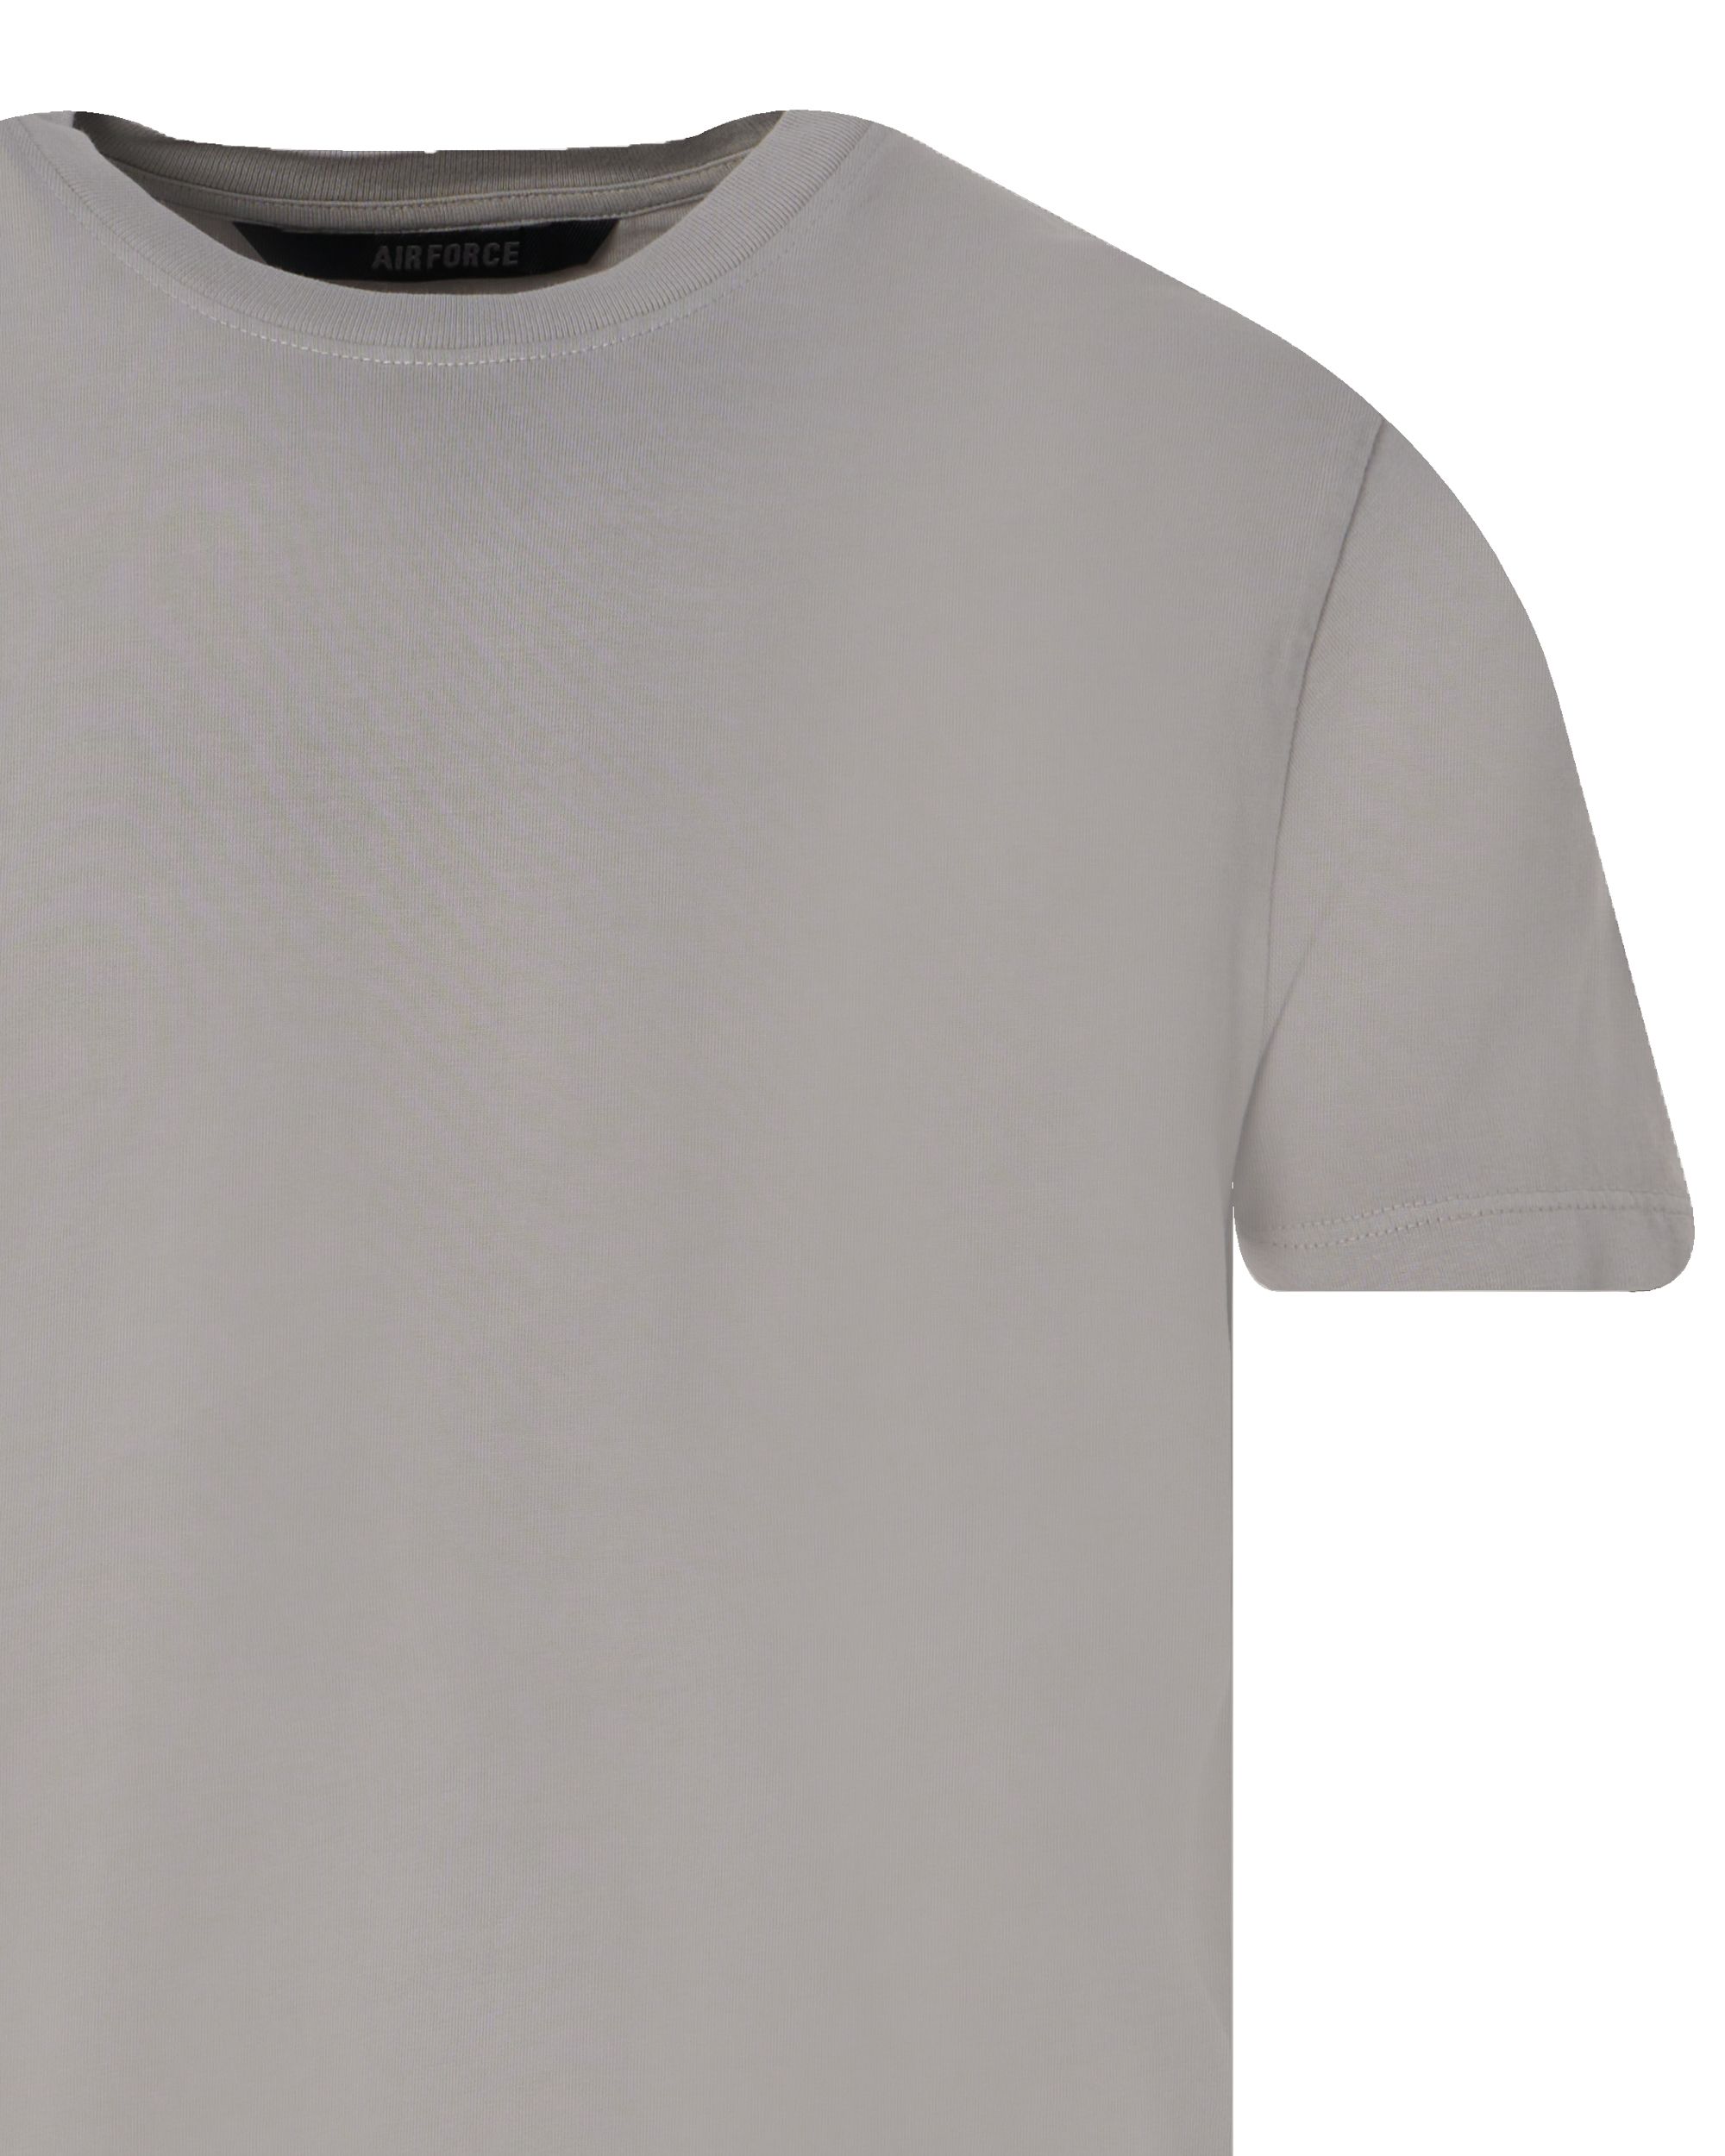 Airforce T-shirt KM Grijs 092923-001-L